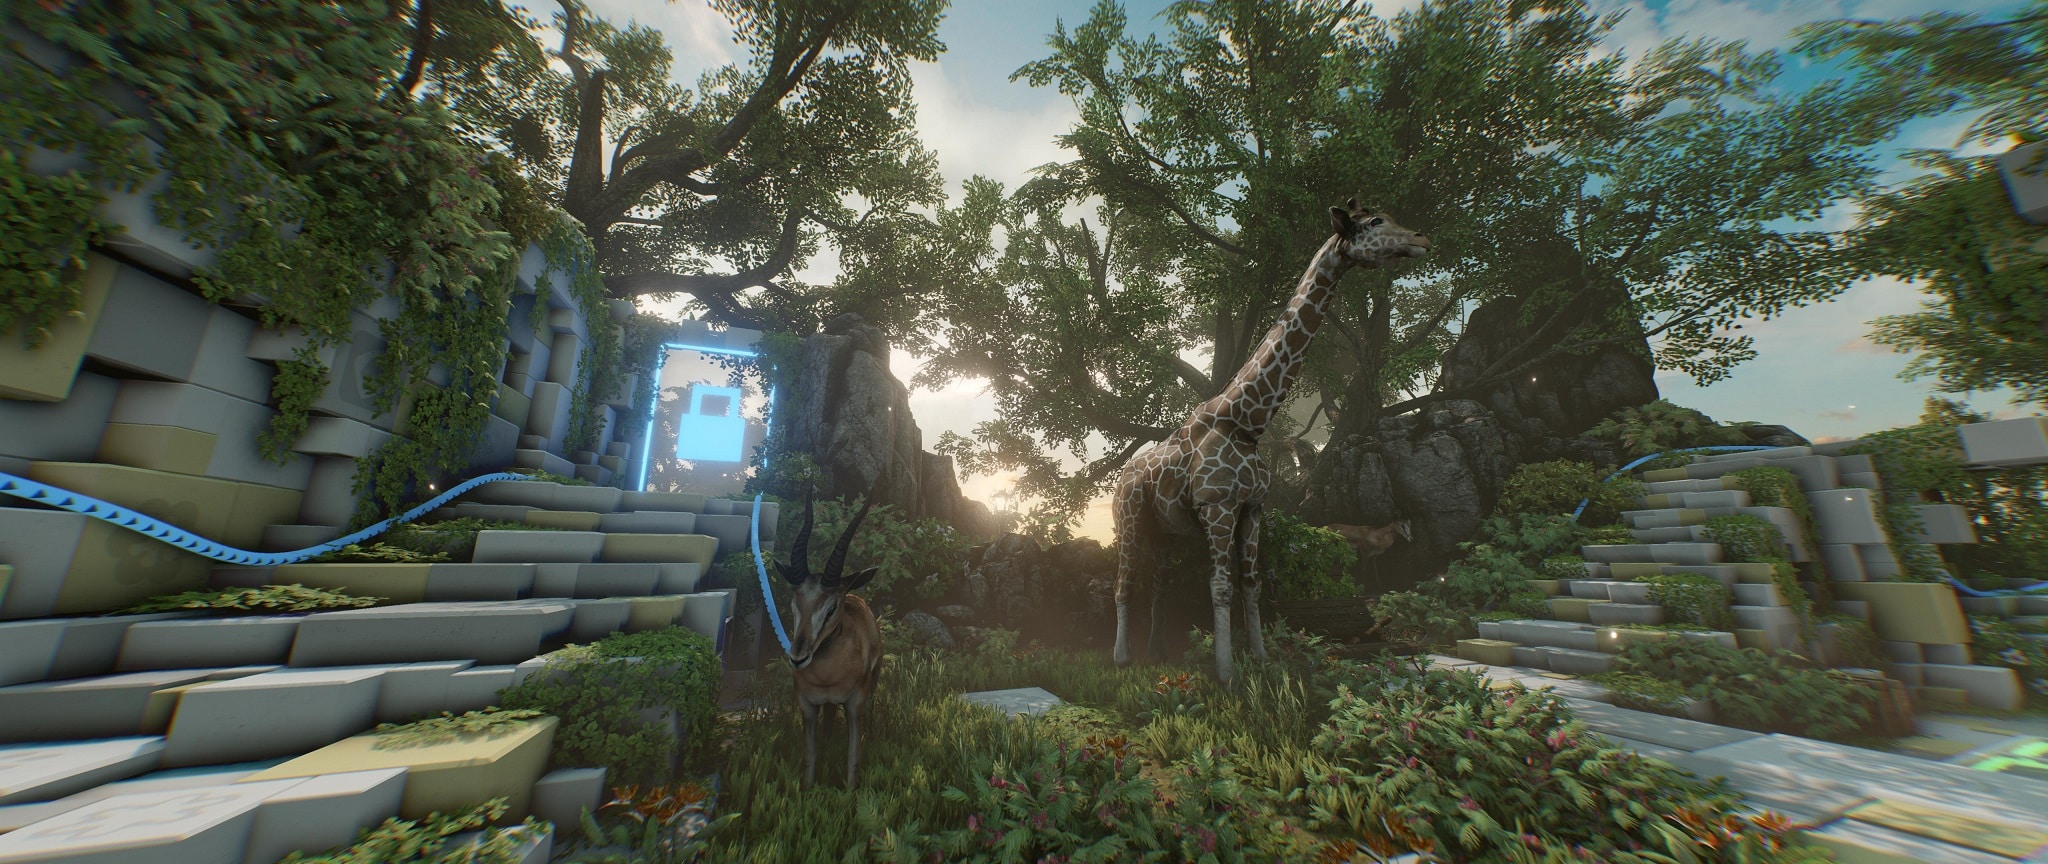 Jungle quest virtual reality screenshot 7 sml